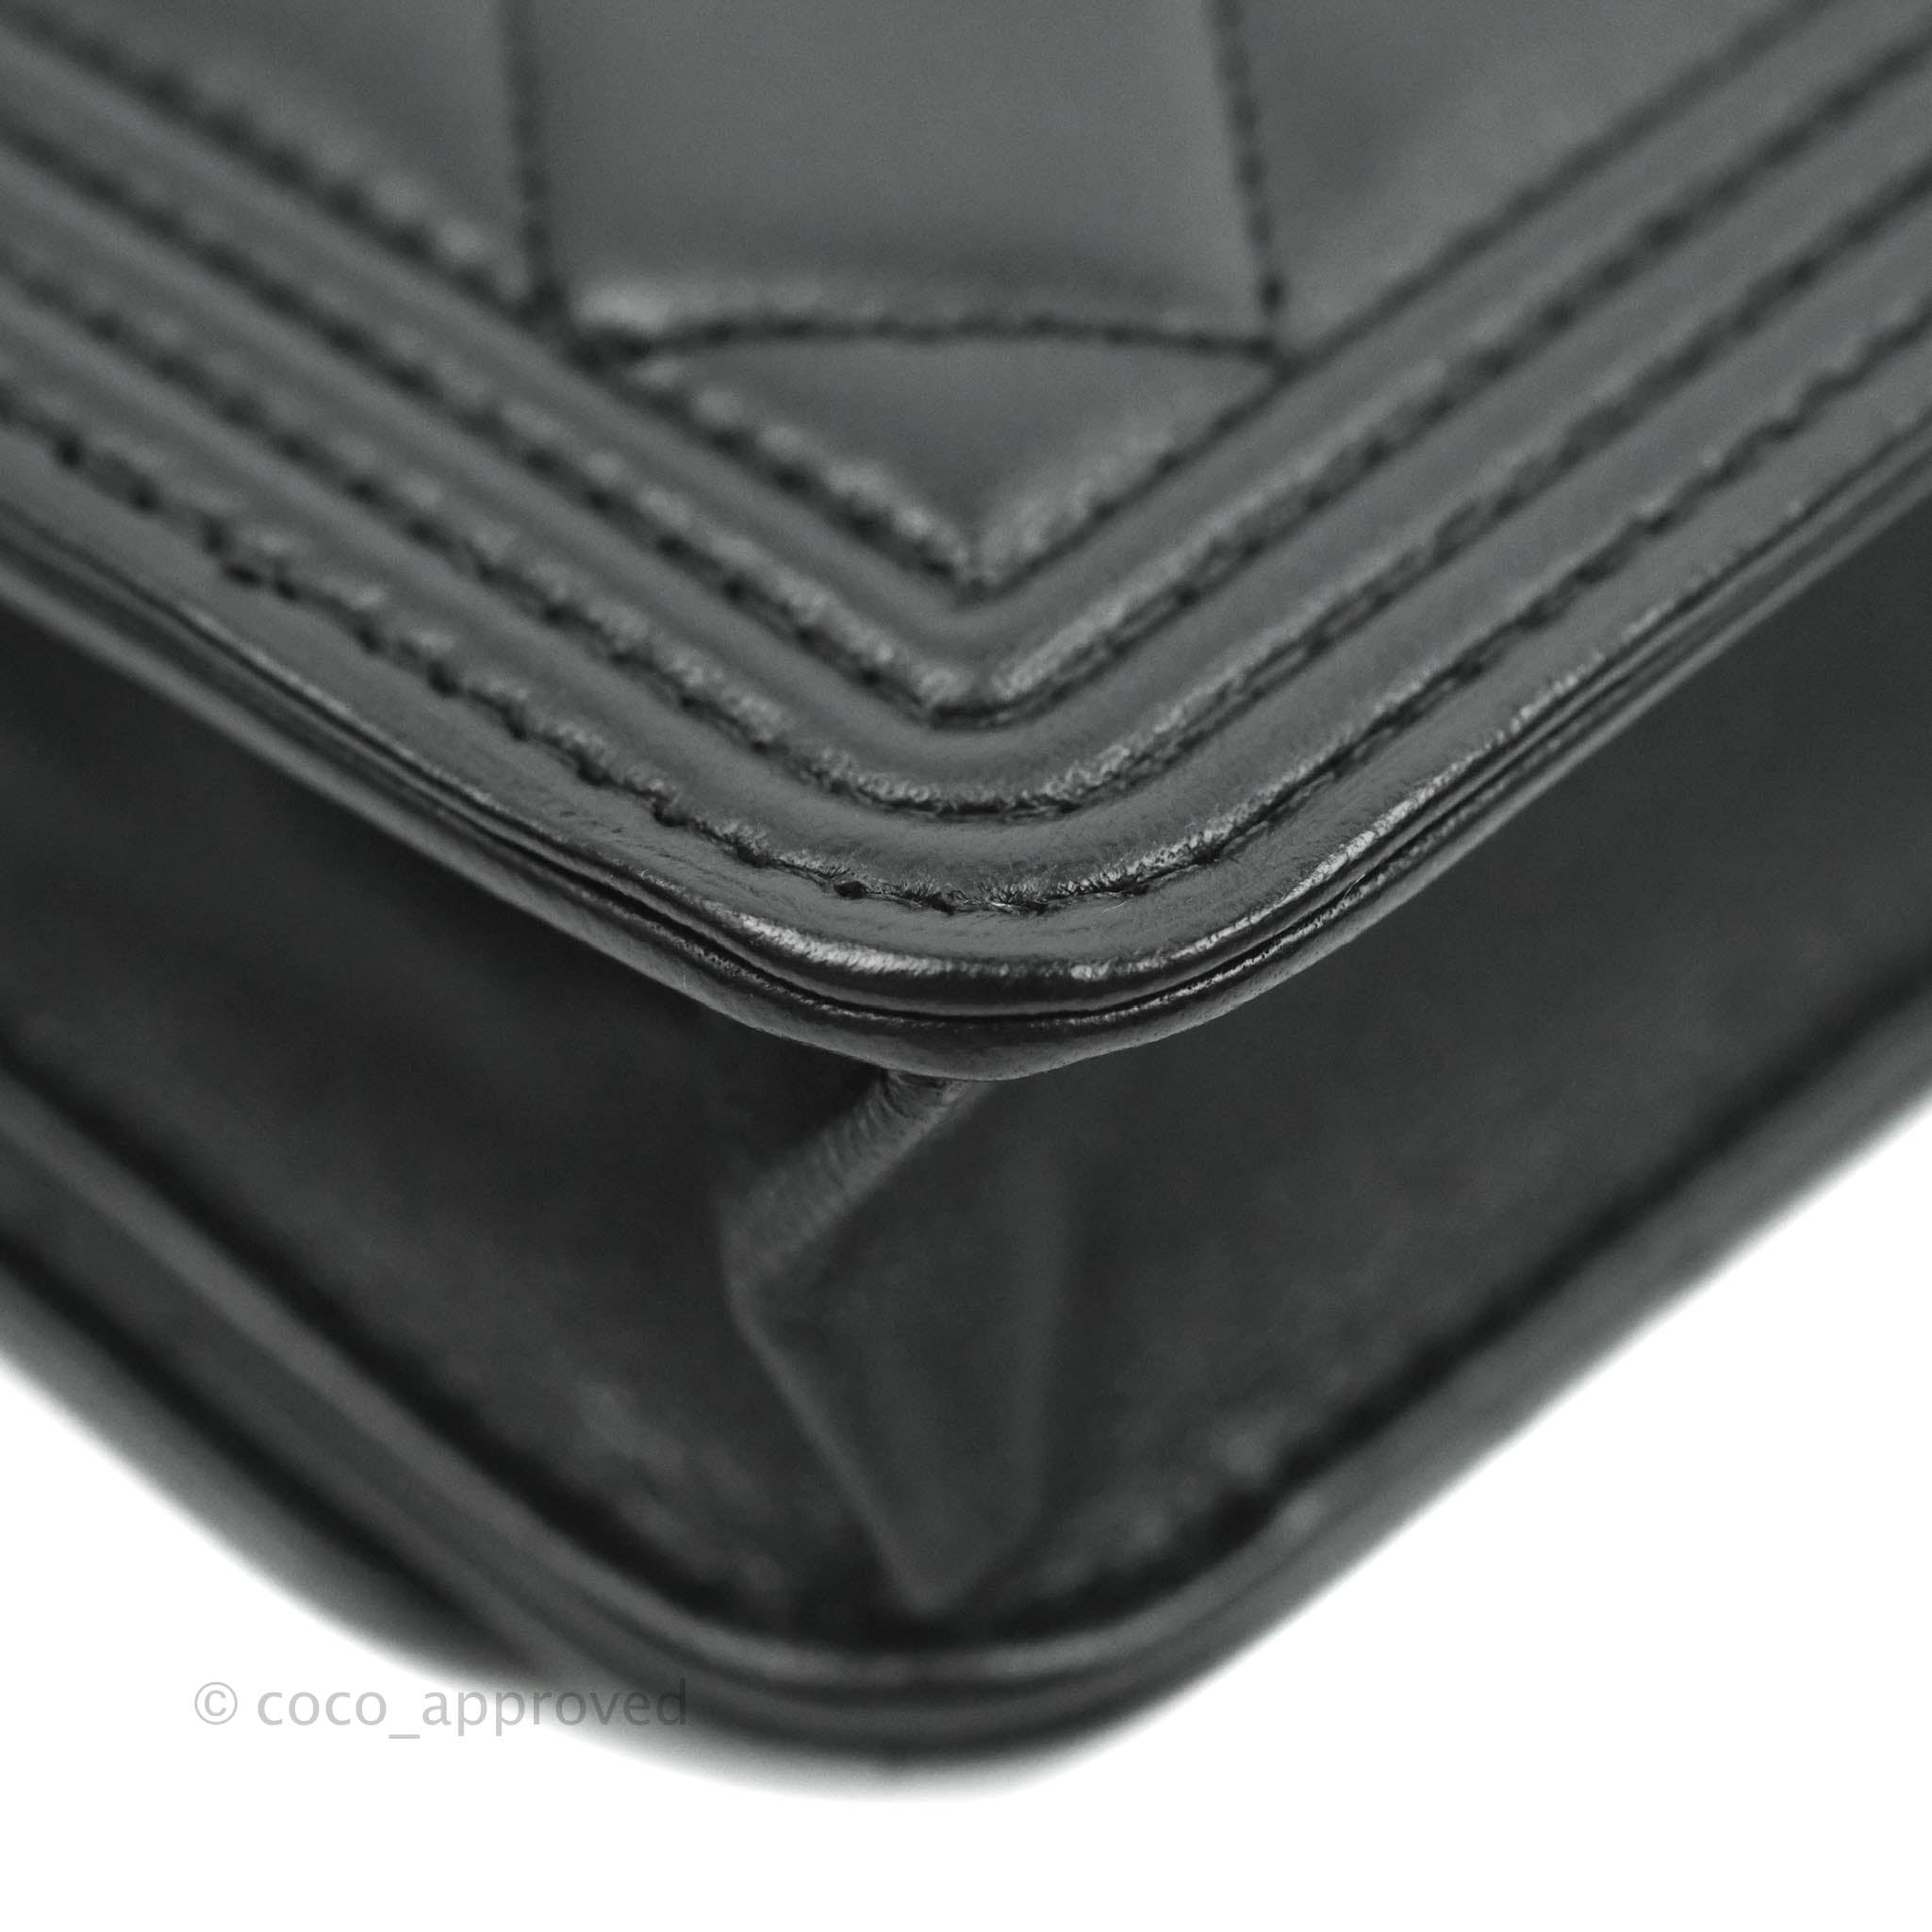 Chanel Boy WOC Handbag Black/Gold Croc Embossed Calfskin and Python - Allu  USA